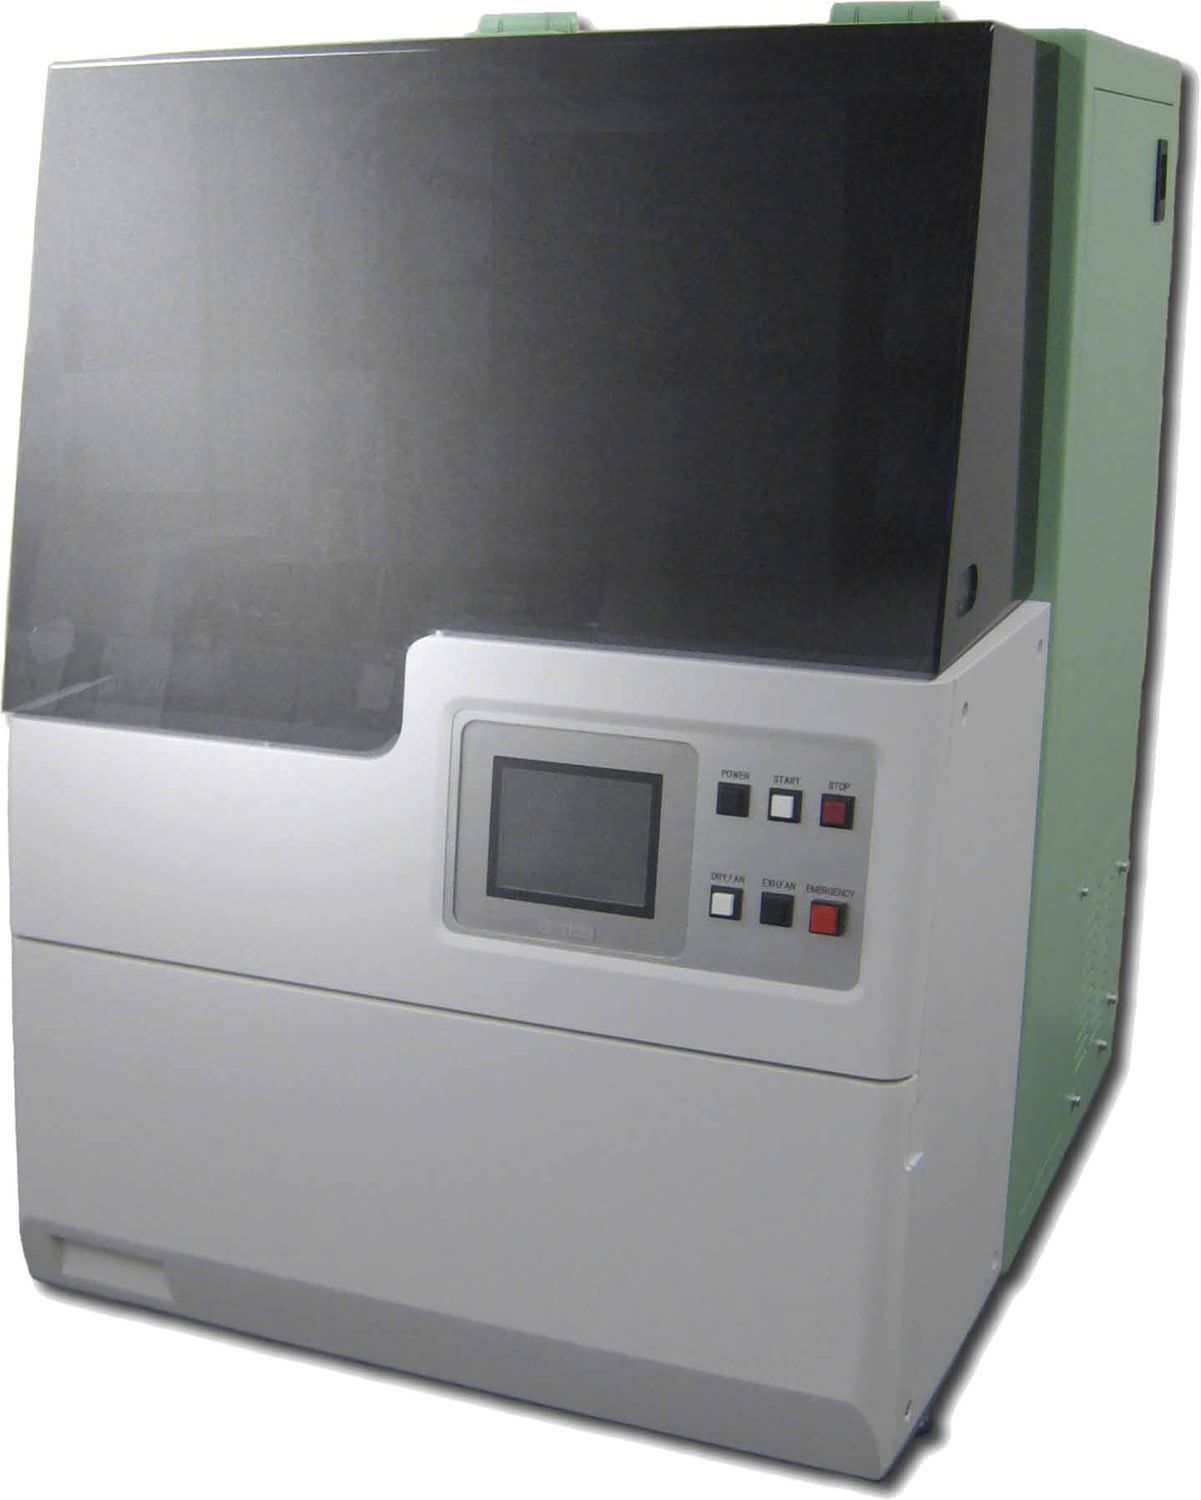 Automatic glass coverslipper RCM 9000 Medite GmbH